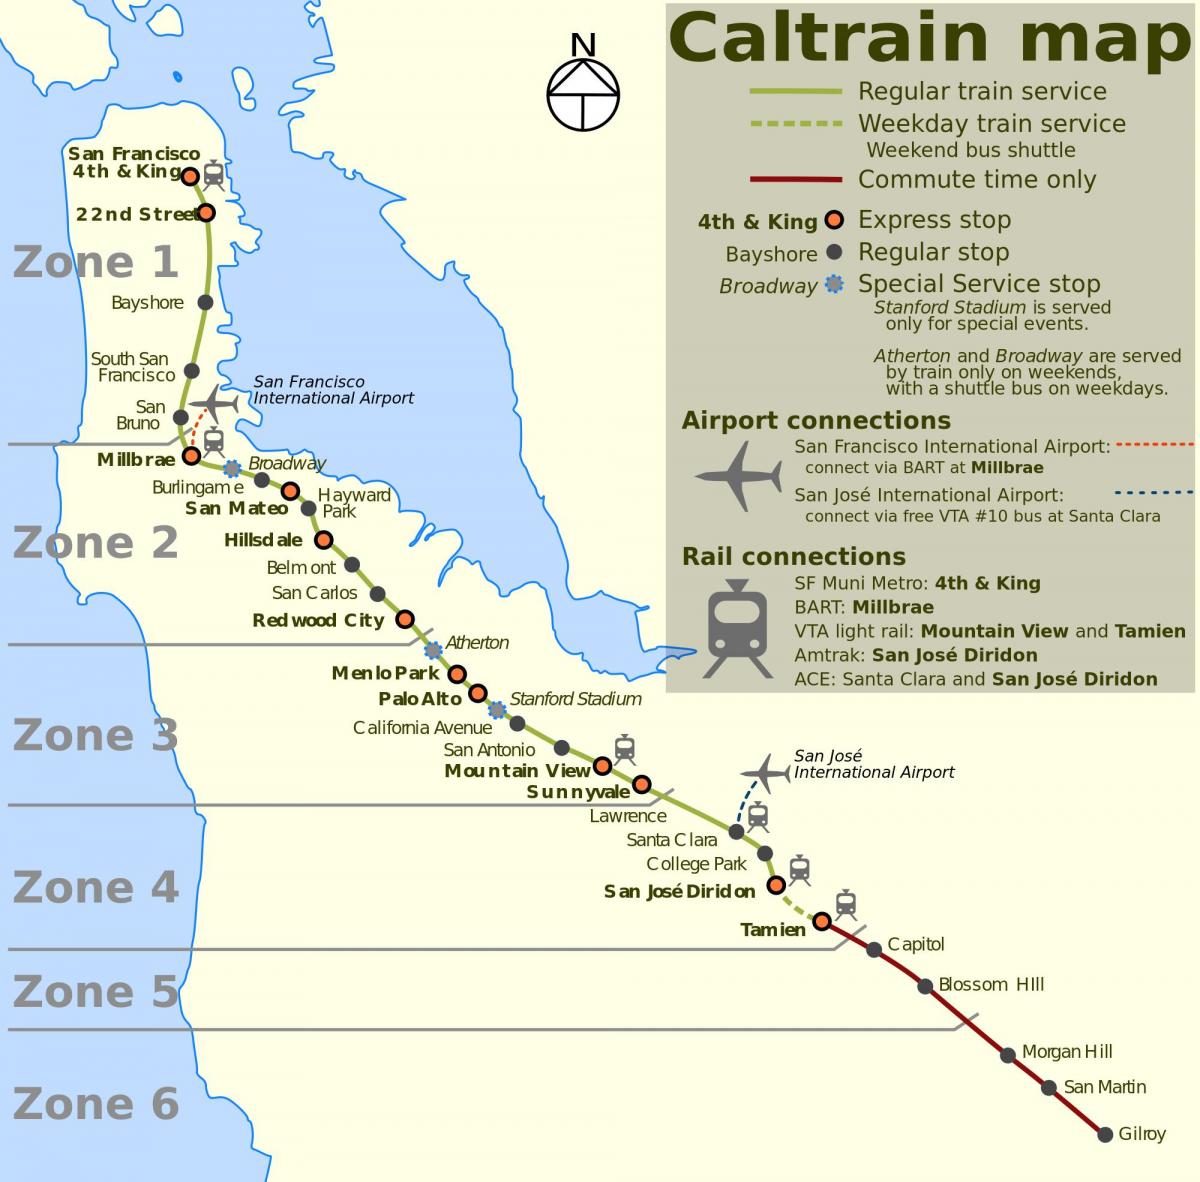 San Francisco caltrain რუკა